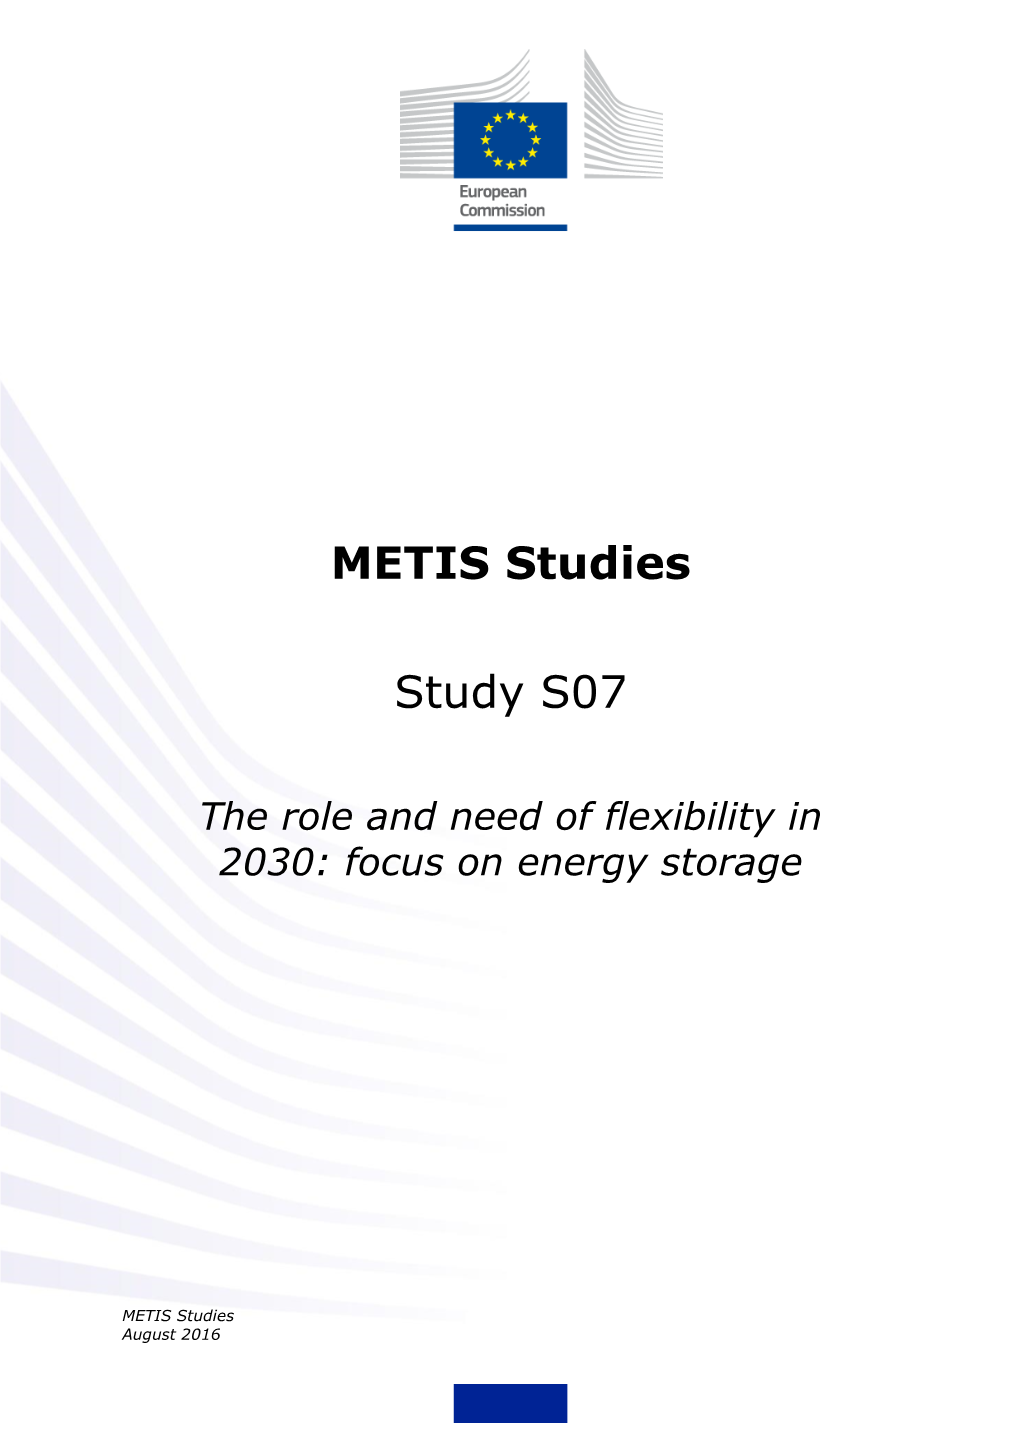 METIS Studies Study